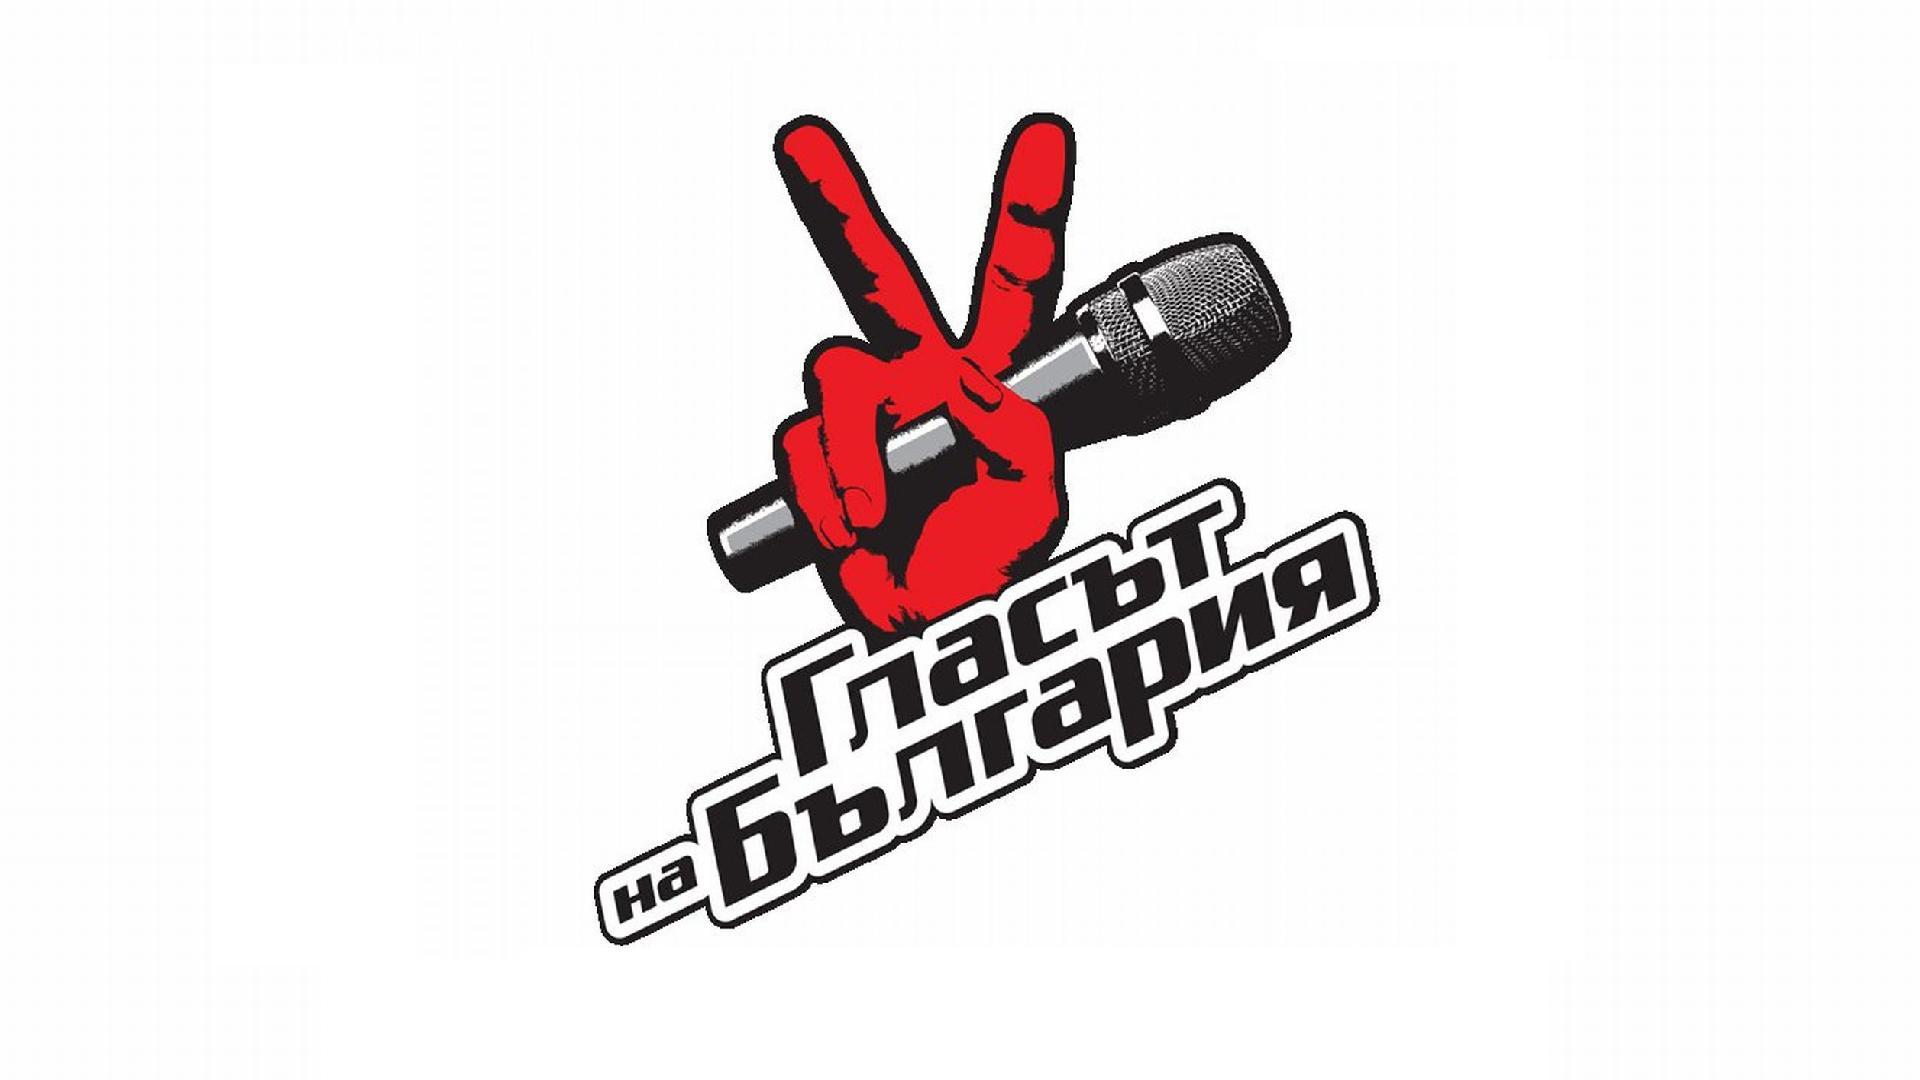 The Voice of Bulgaria